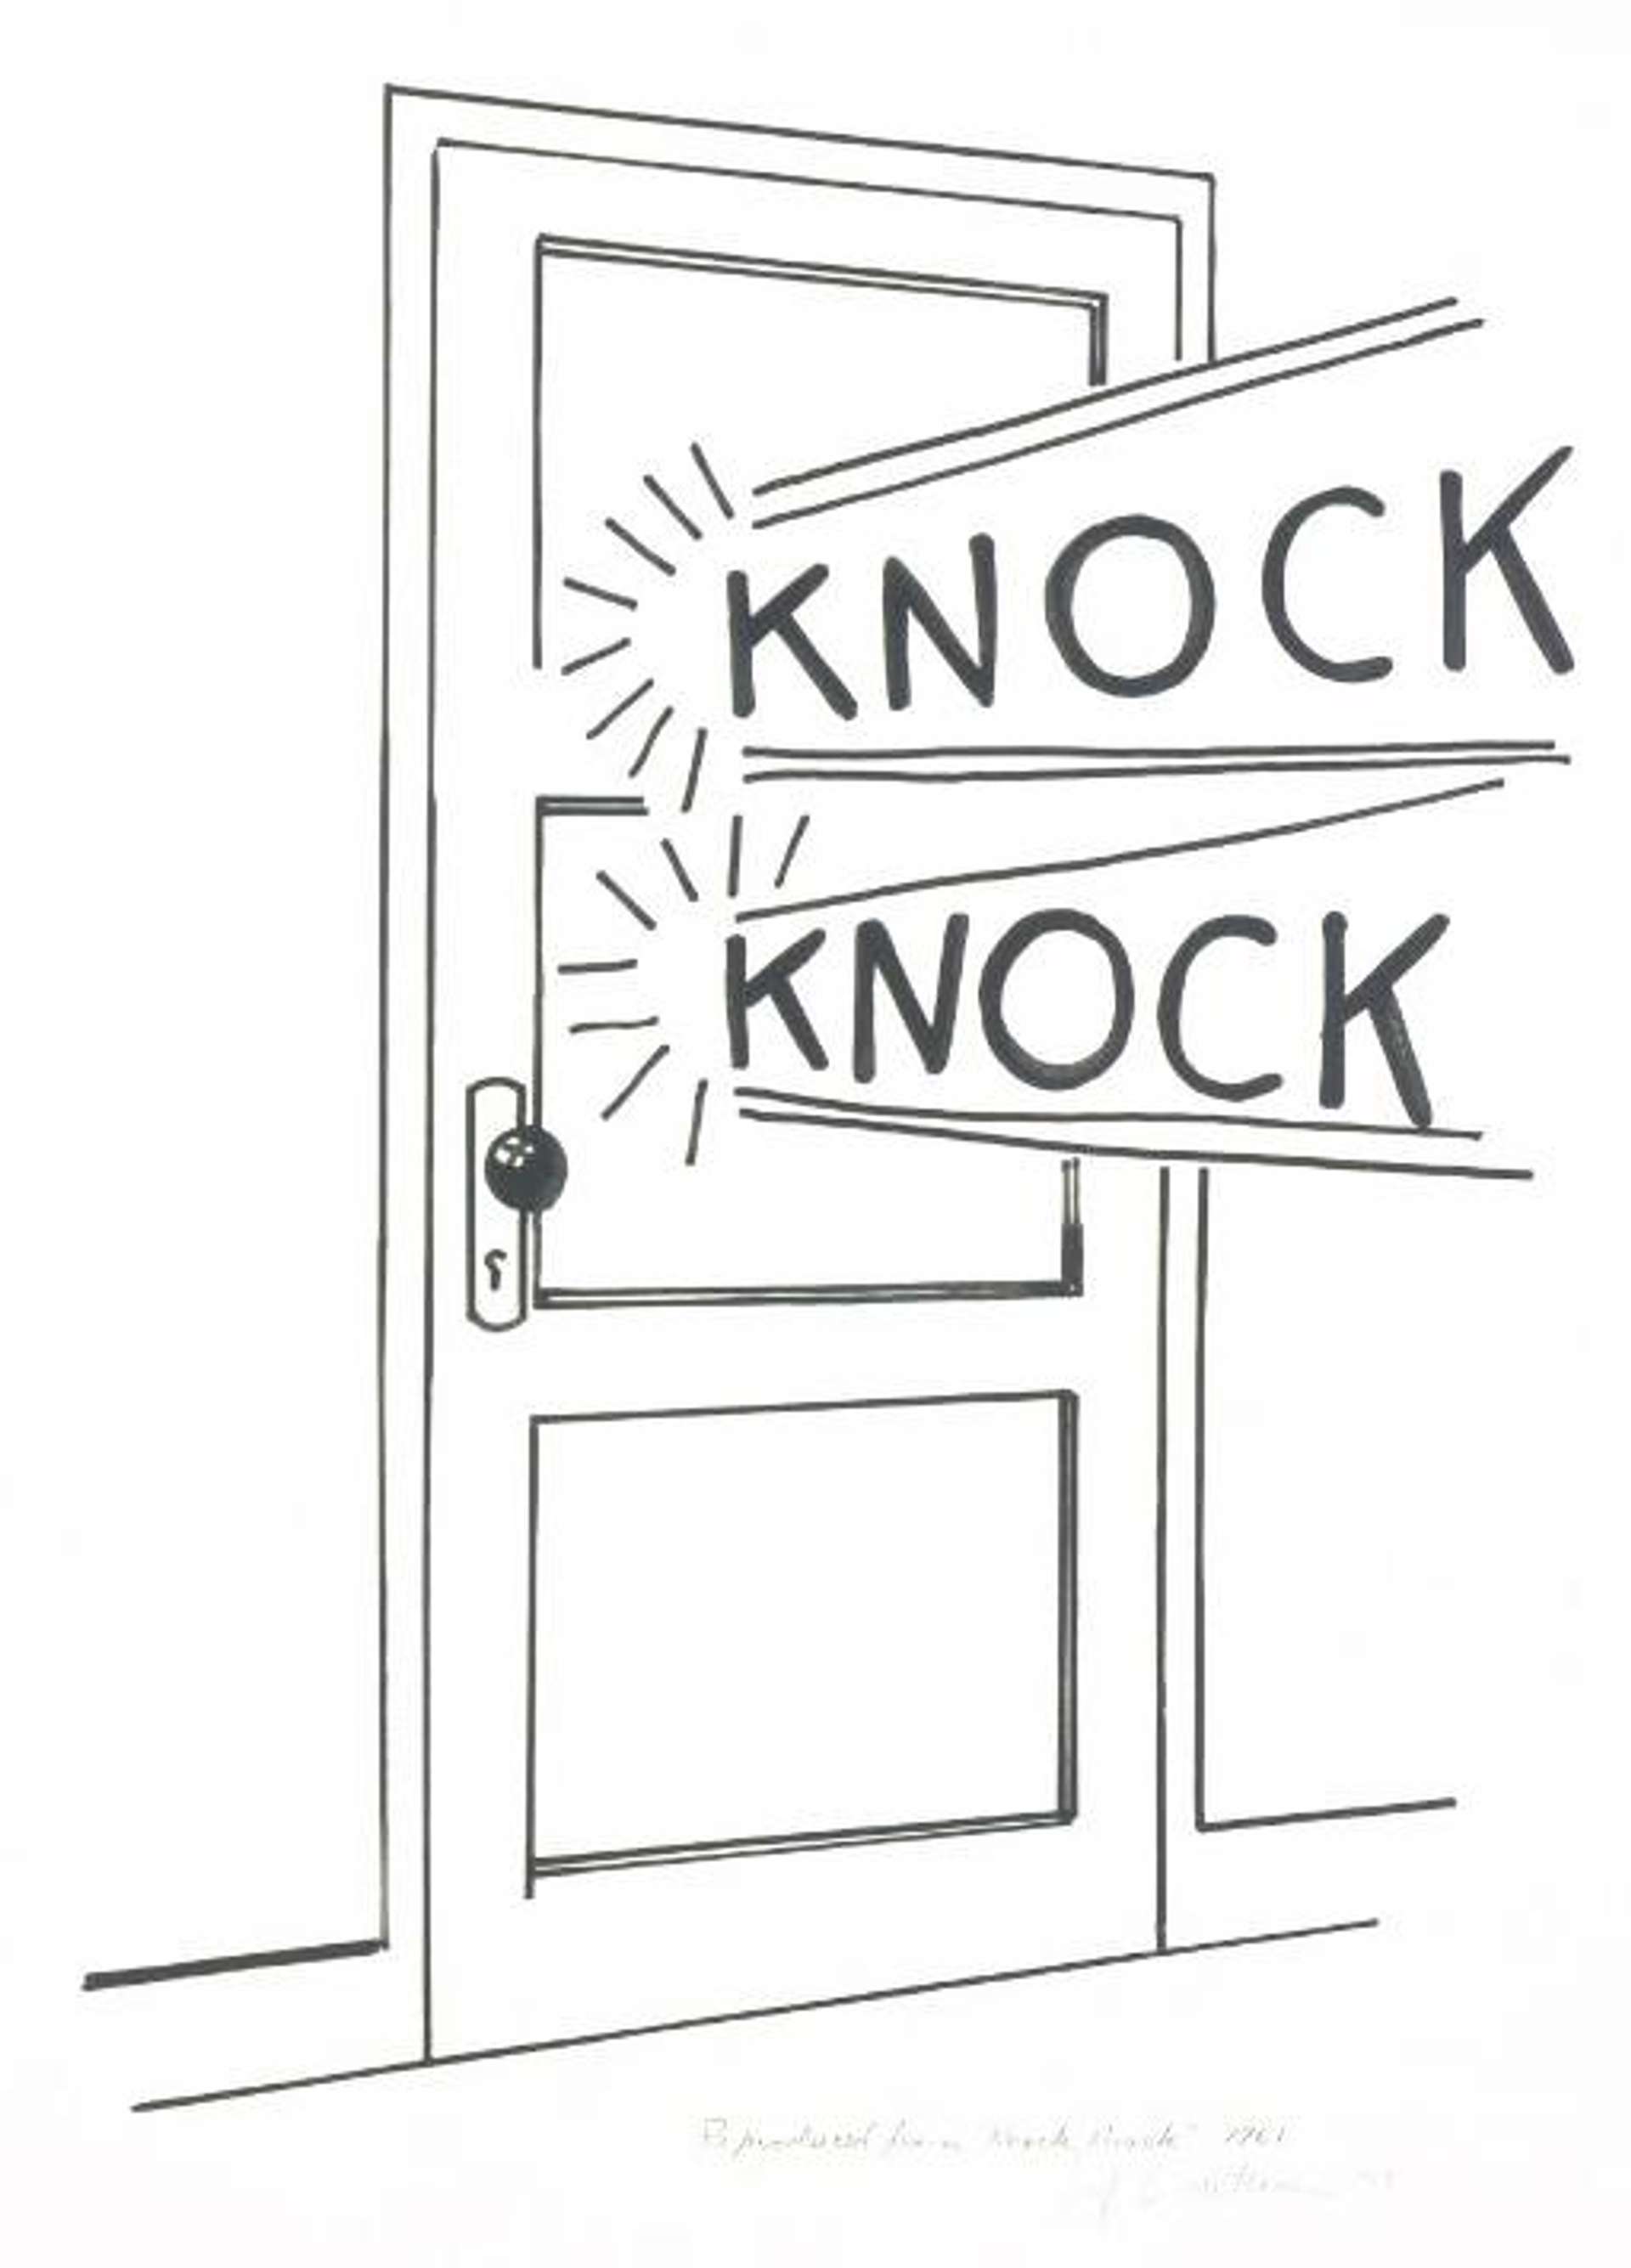 Roy Lichtenstein: Knock, Knock Poster - Signed Print